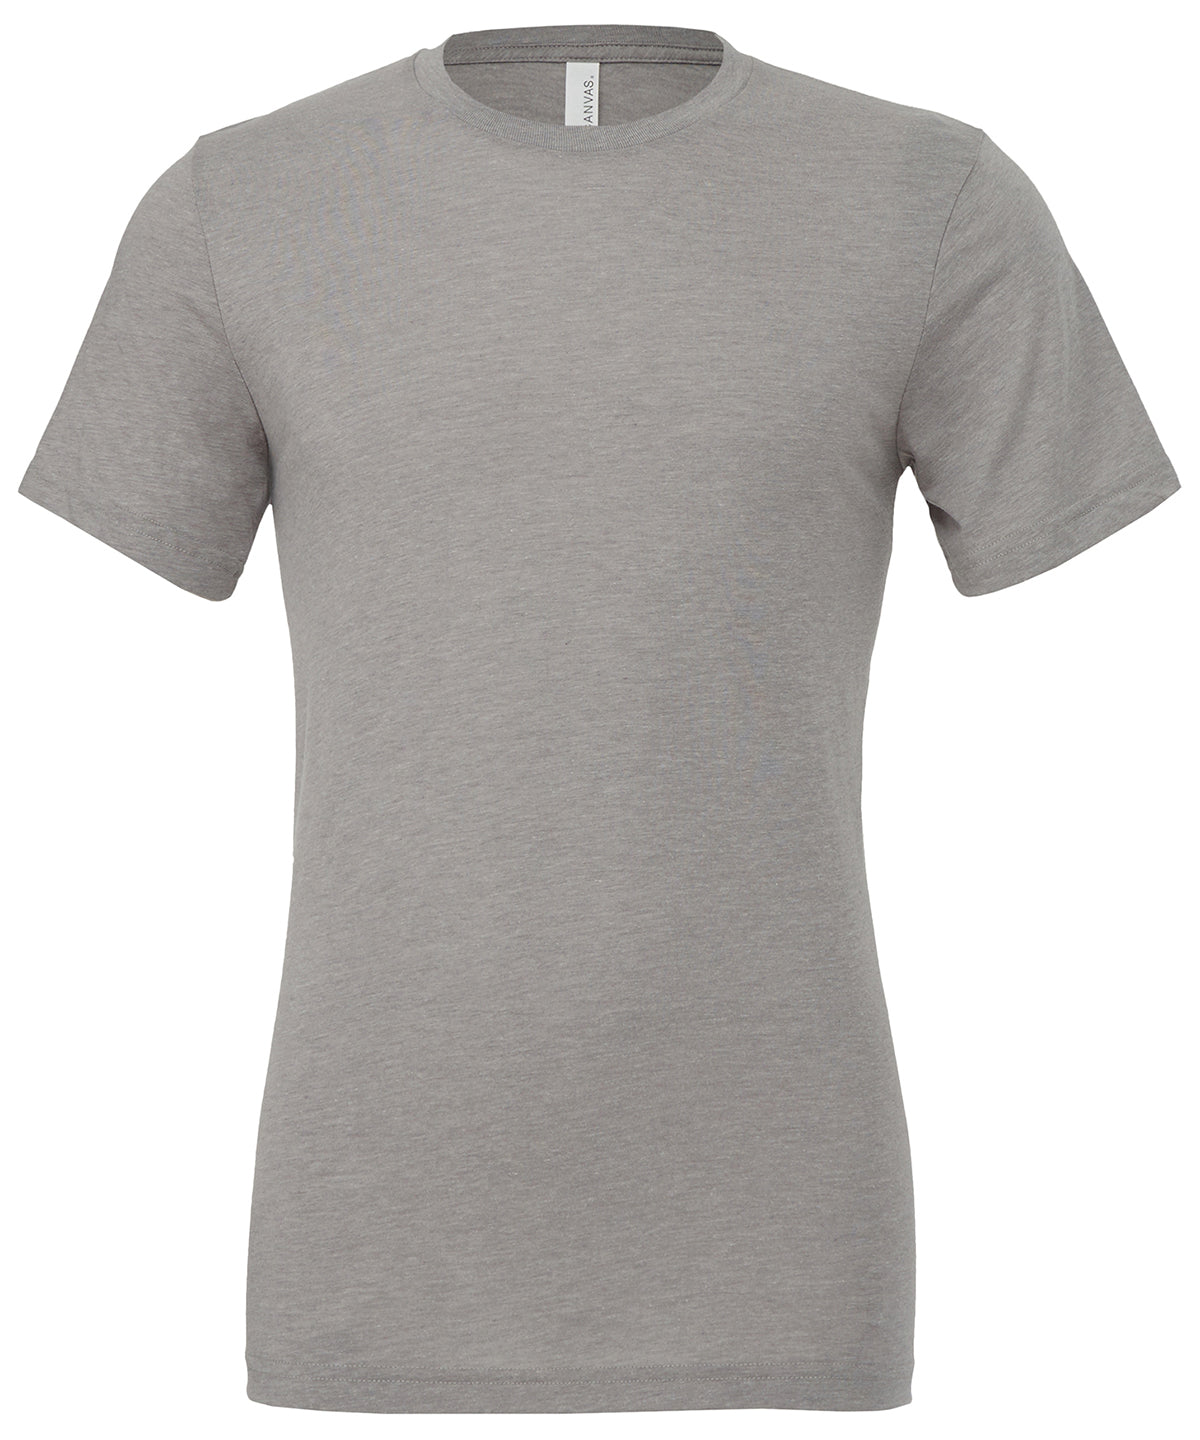 Bella Canvas Unisex triblend crew neck t-shirt Athletic Grey Triblend